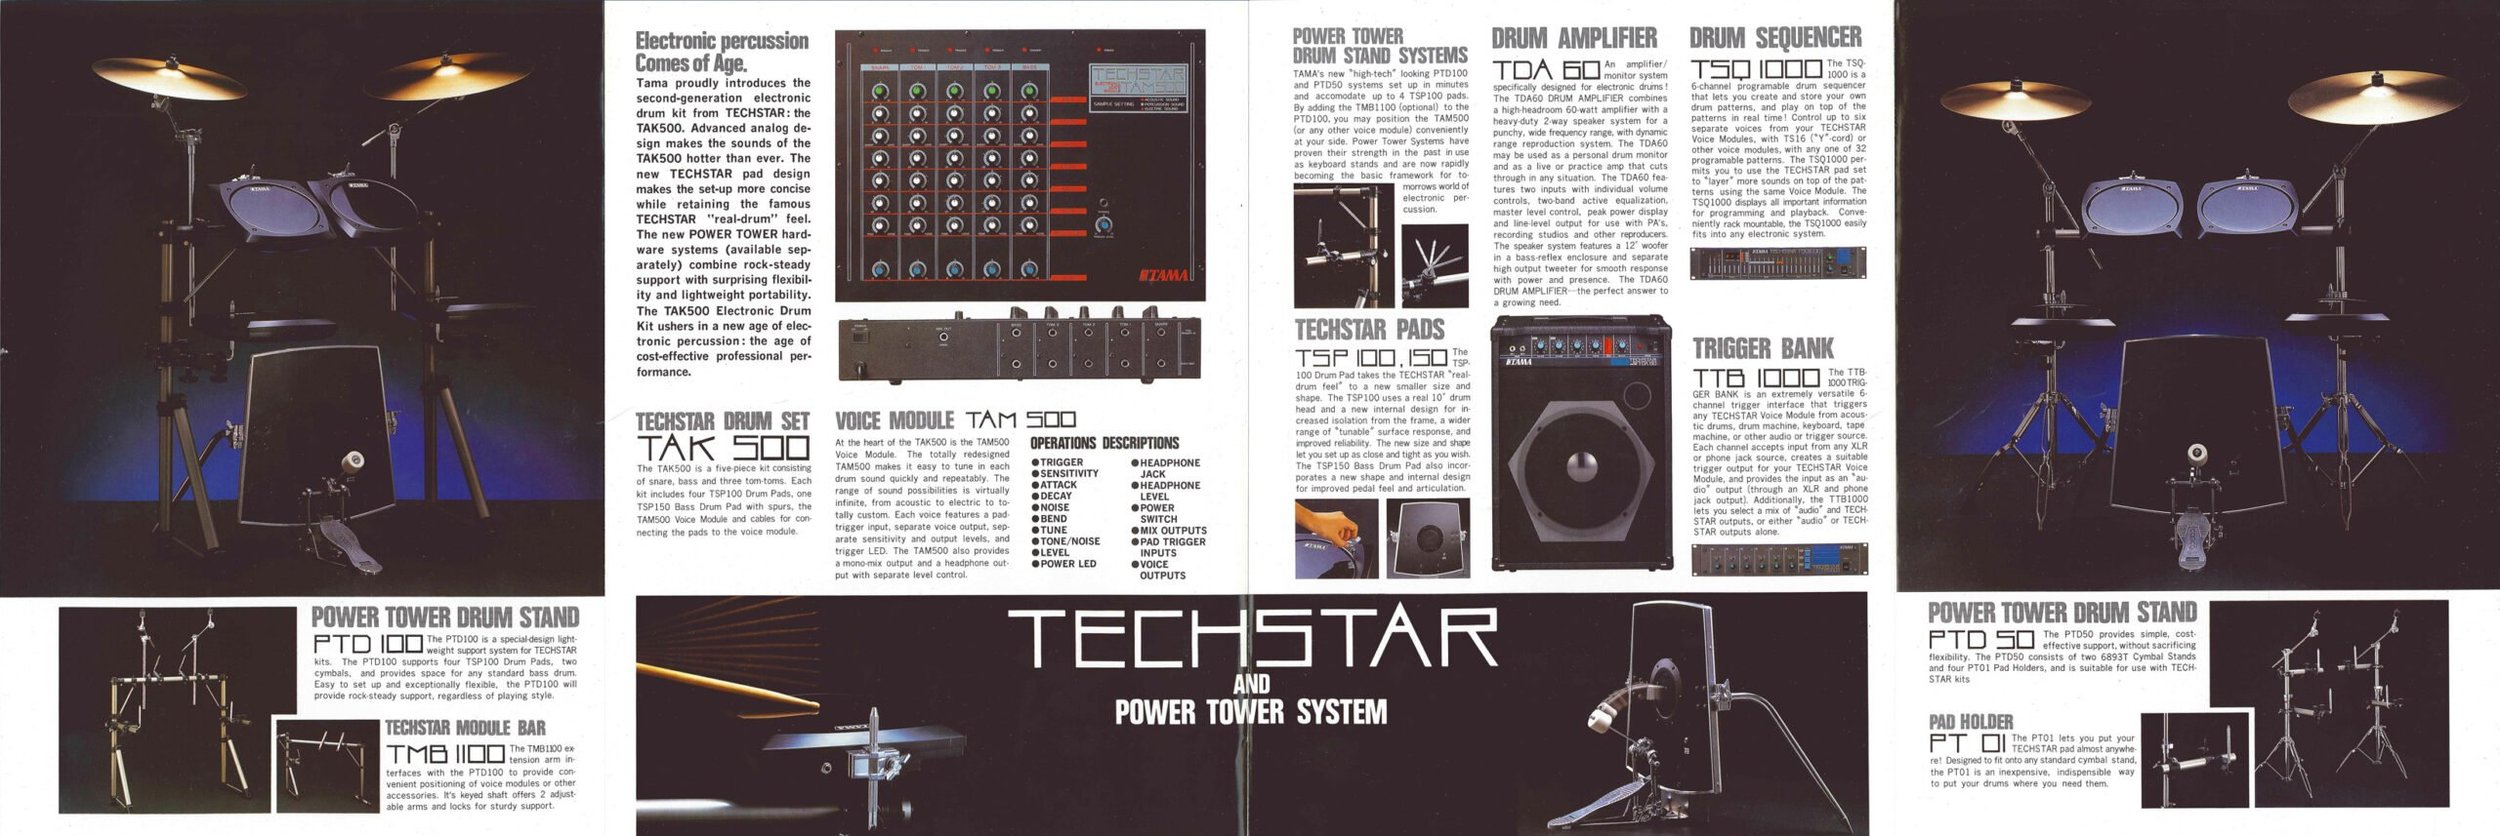 1985Techstar2 02 scaled